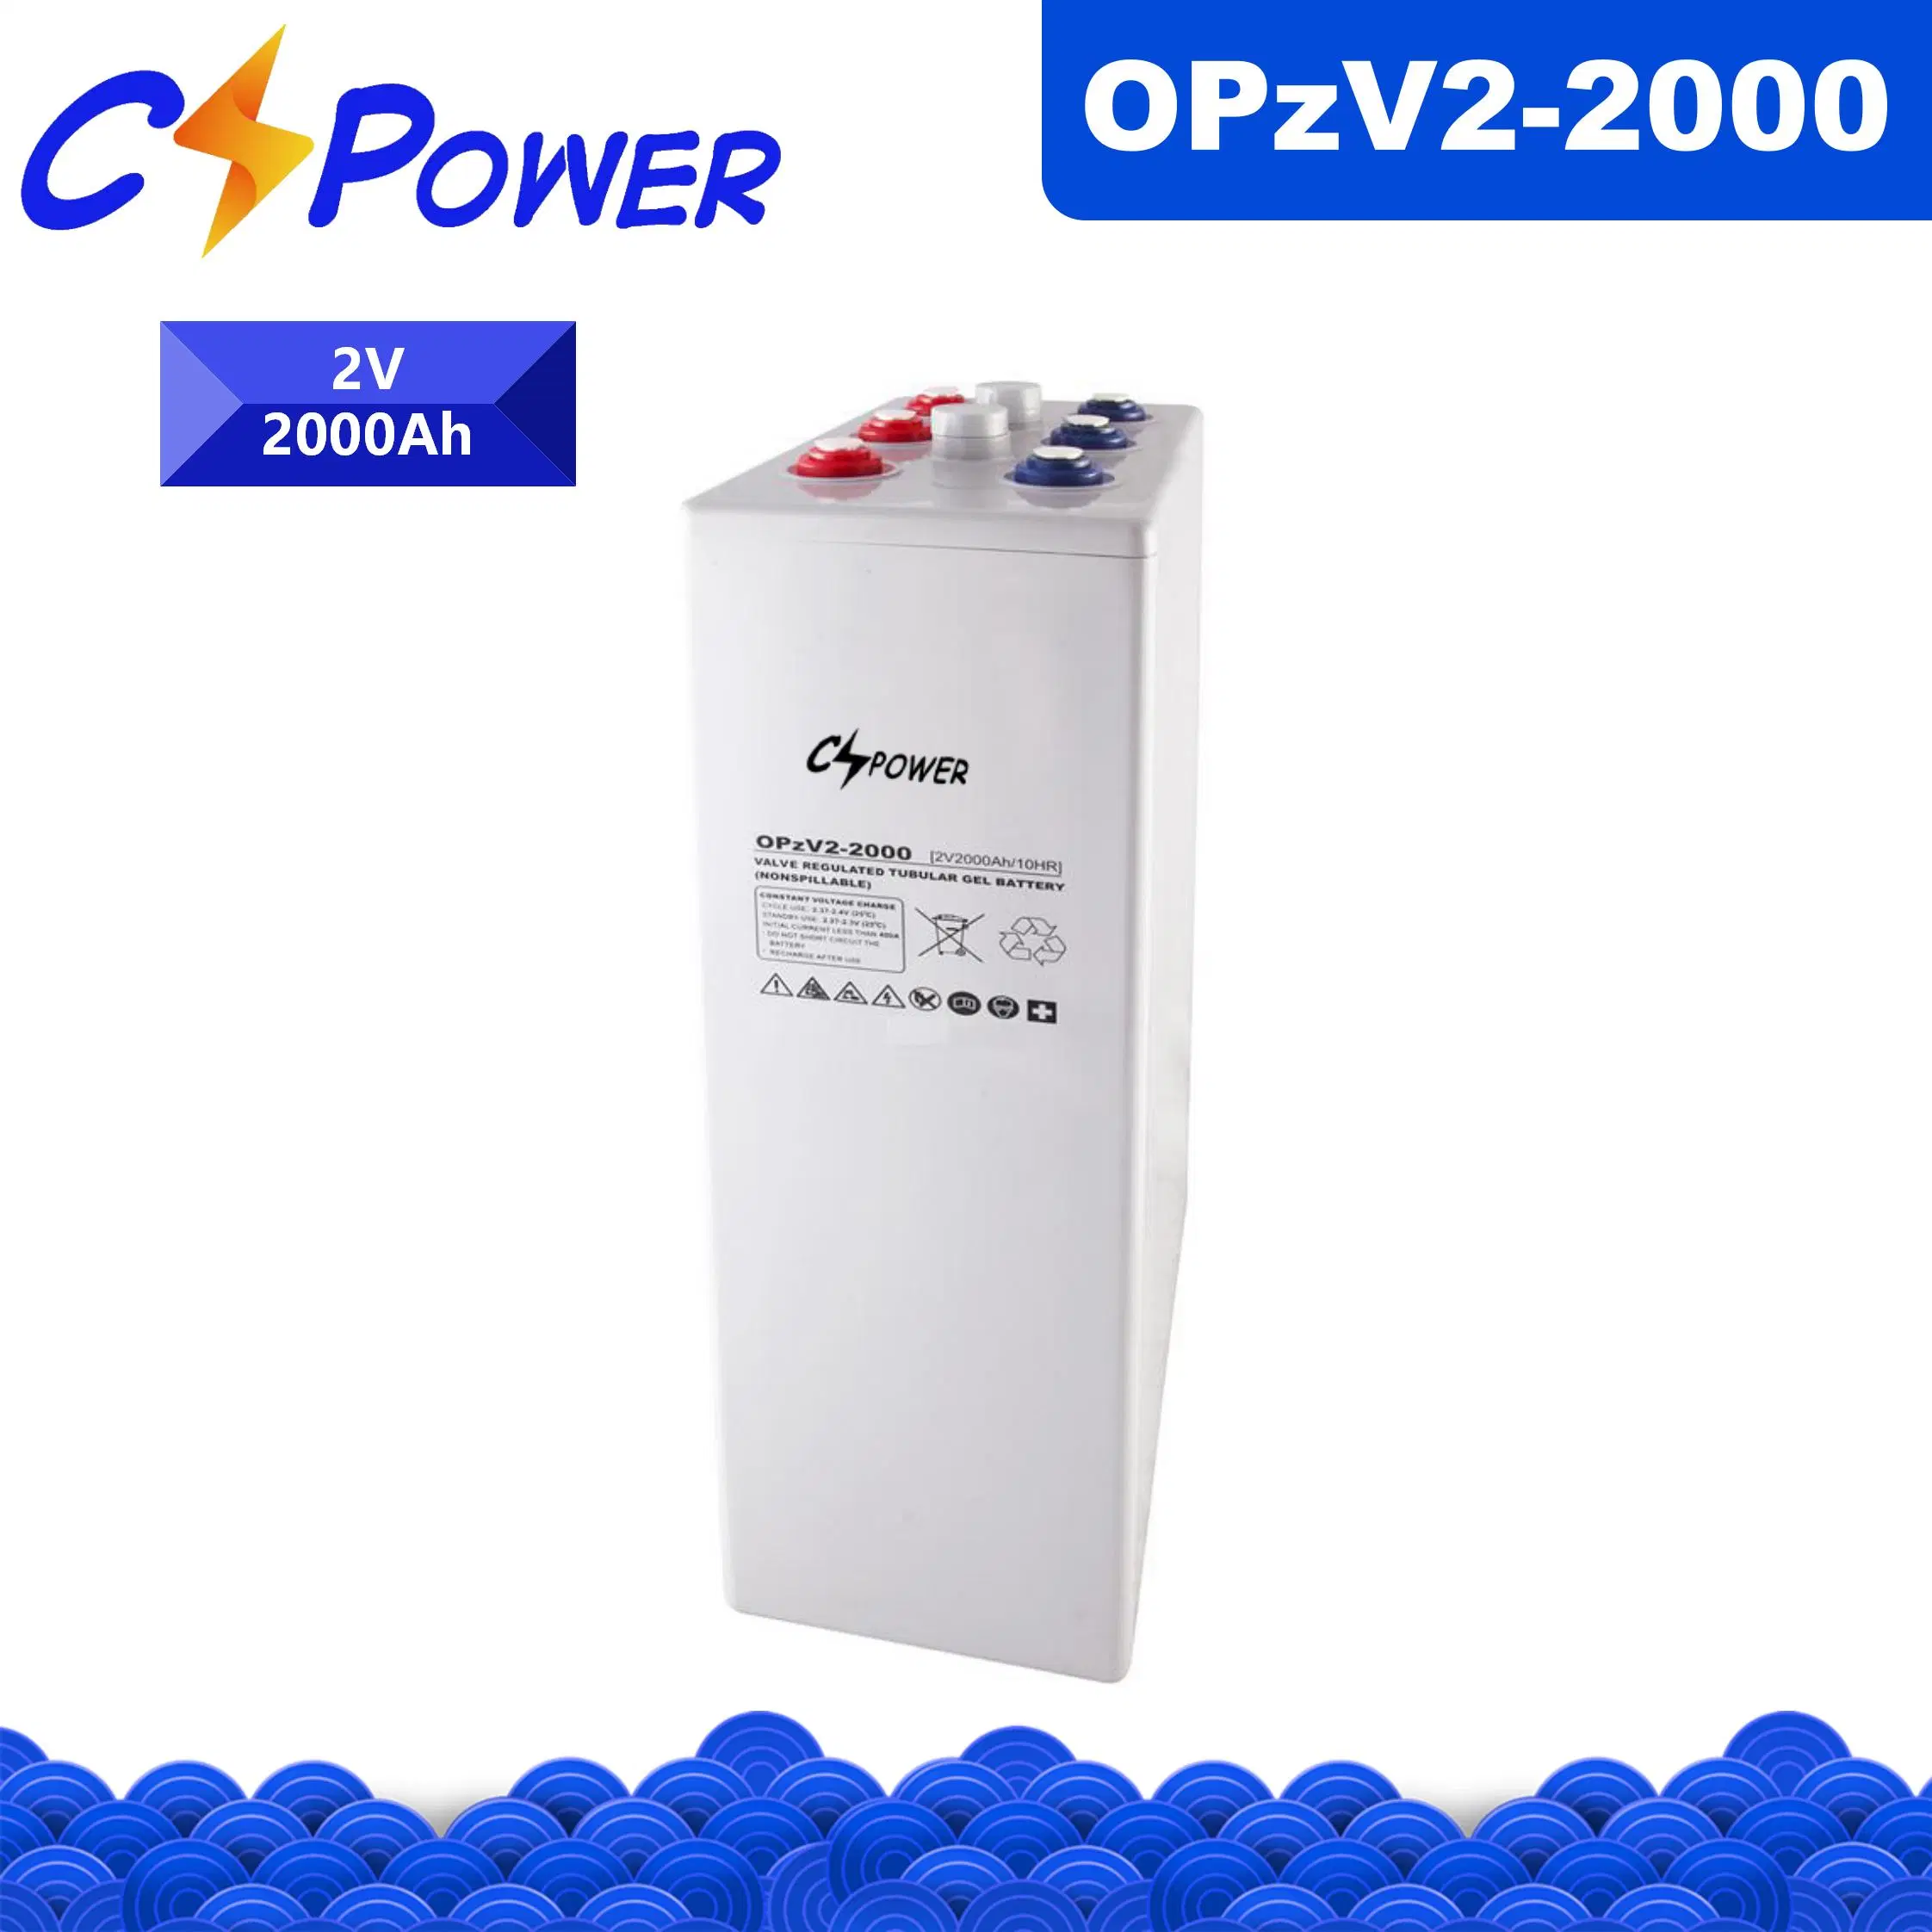 Cspower Opzv-Gel-Tubular-Batterie/Opzv-Solar-Power-Batterie 2V 2000ah für Telekom/Solar-System Power